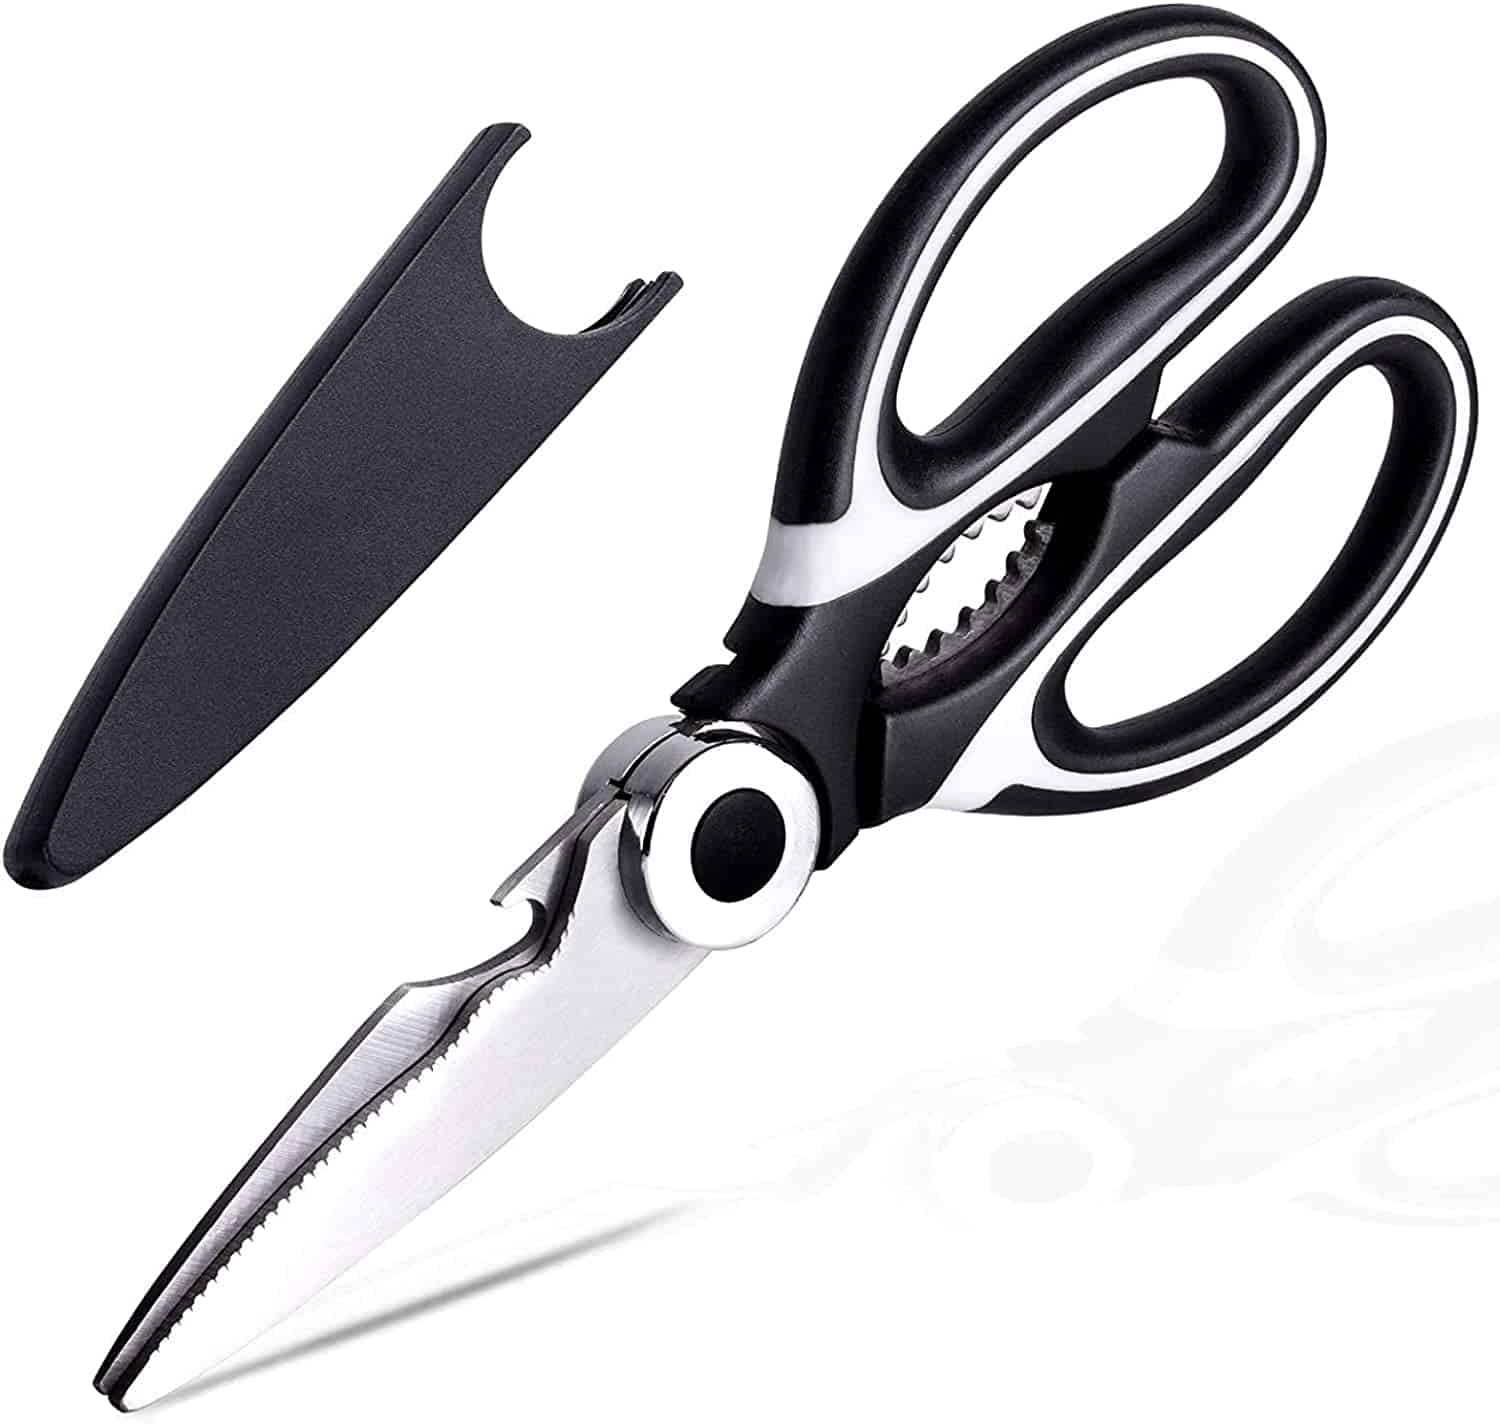 Display image of scissors